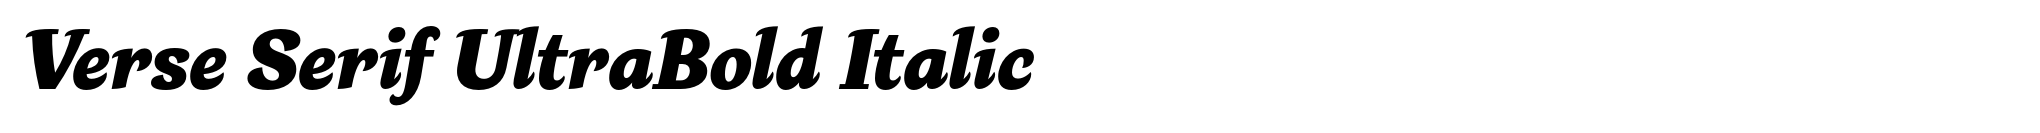 Verse Serif UltraBold Italic image